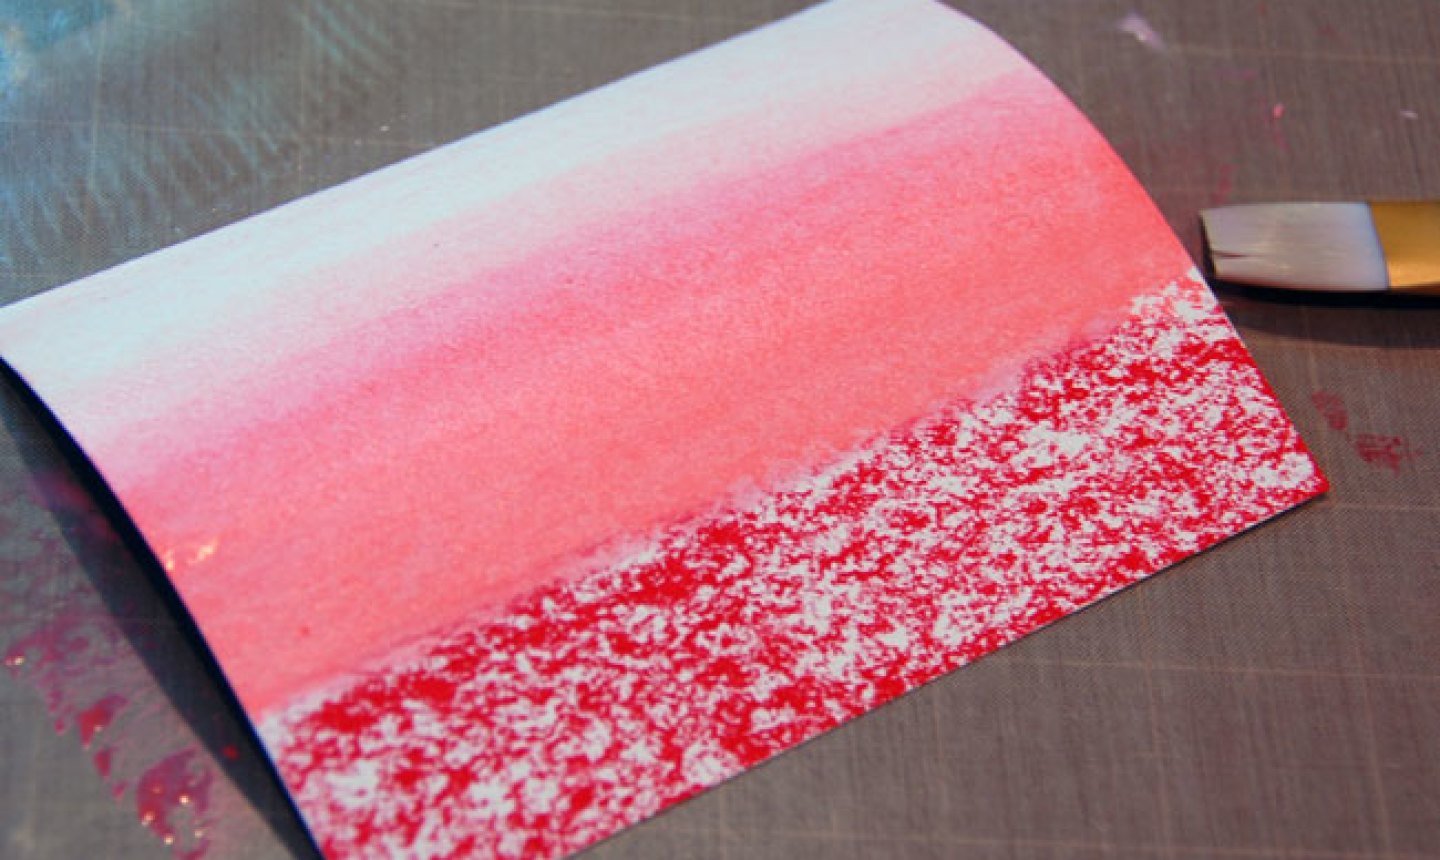 blending gelatos on a card